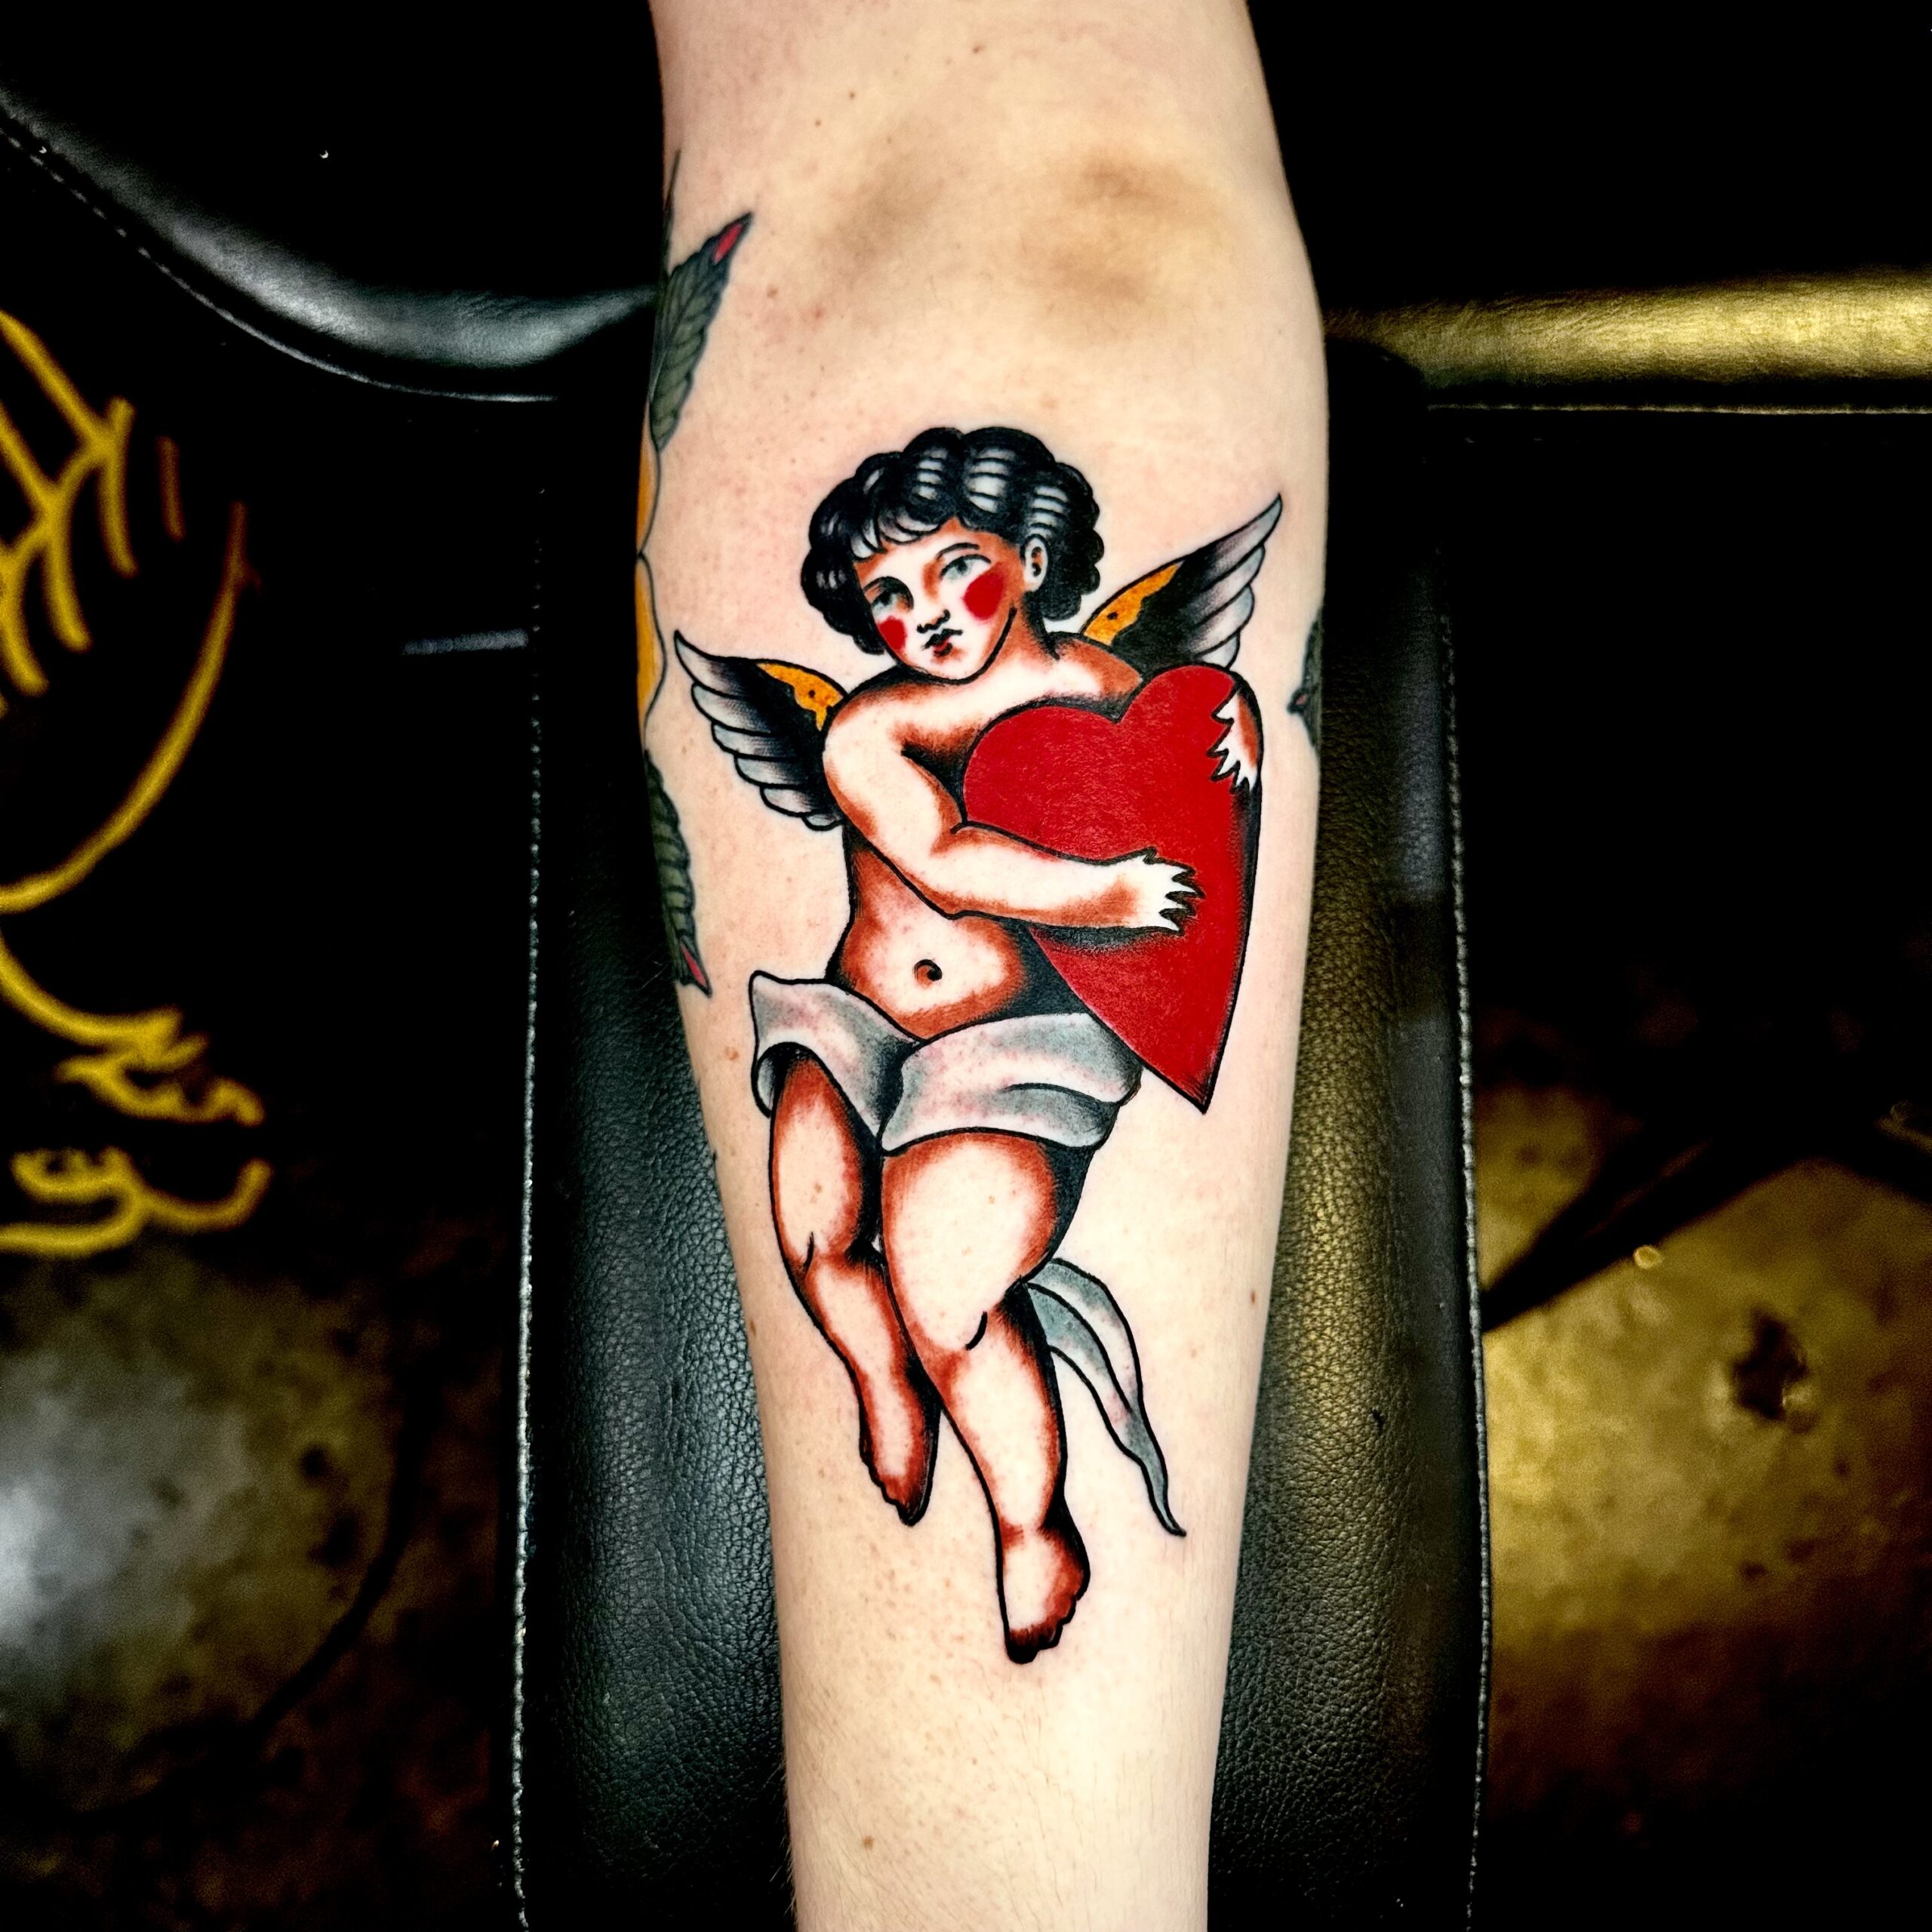 Tattoo of cupid from best tattoo shop in Dallas